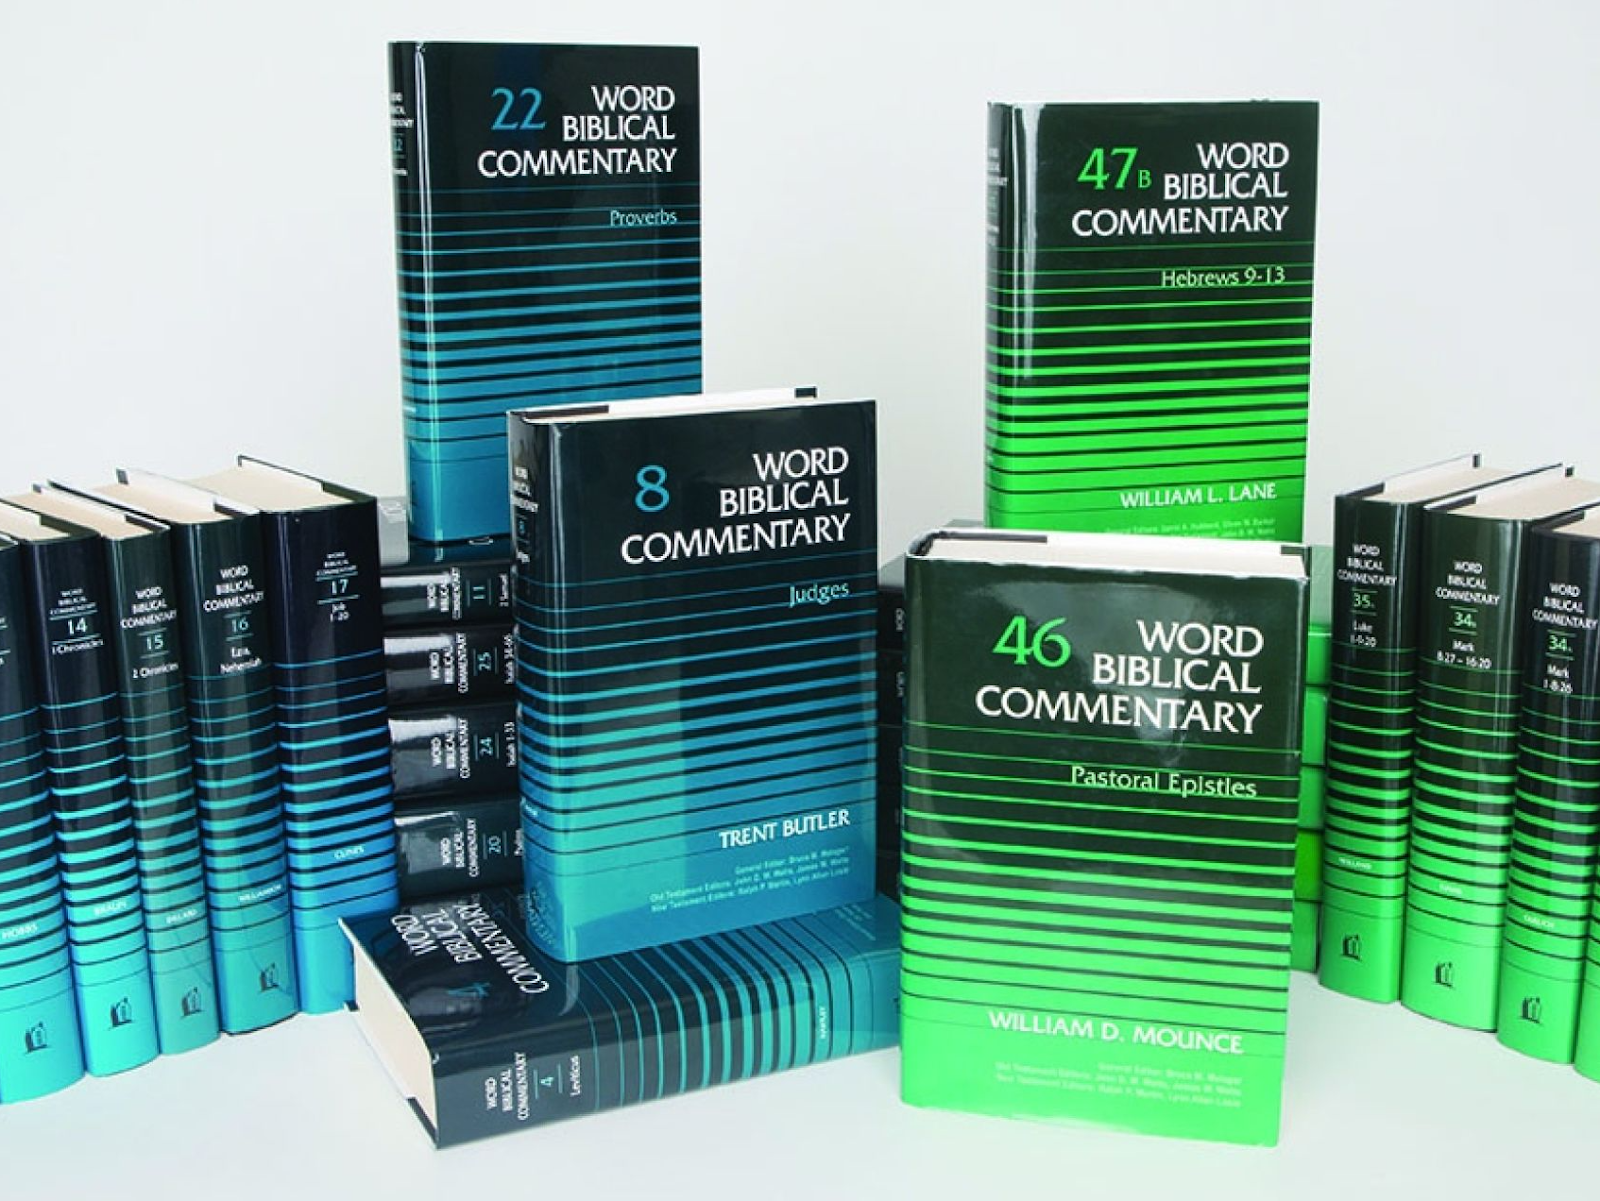 Several WBC books stacked together

对圣经研究领域的基督教学者而言，Word Bible Commentaries（WBC）以其专业性闻名于世。
